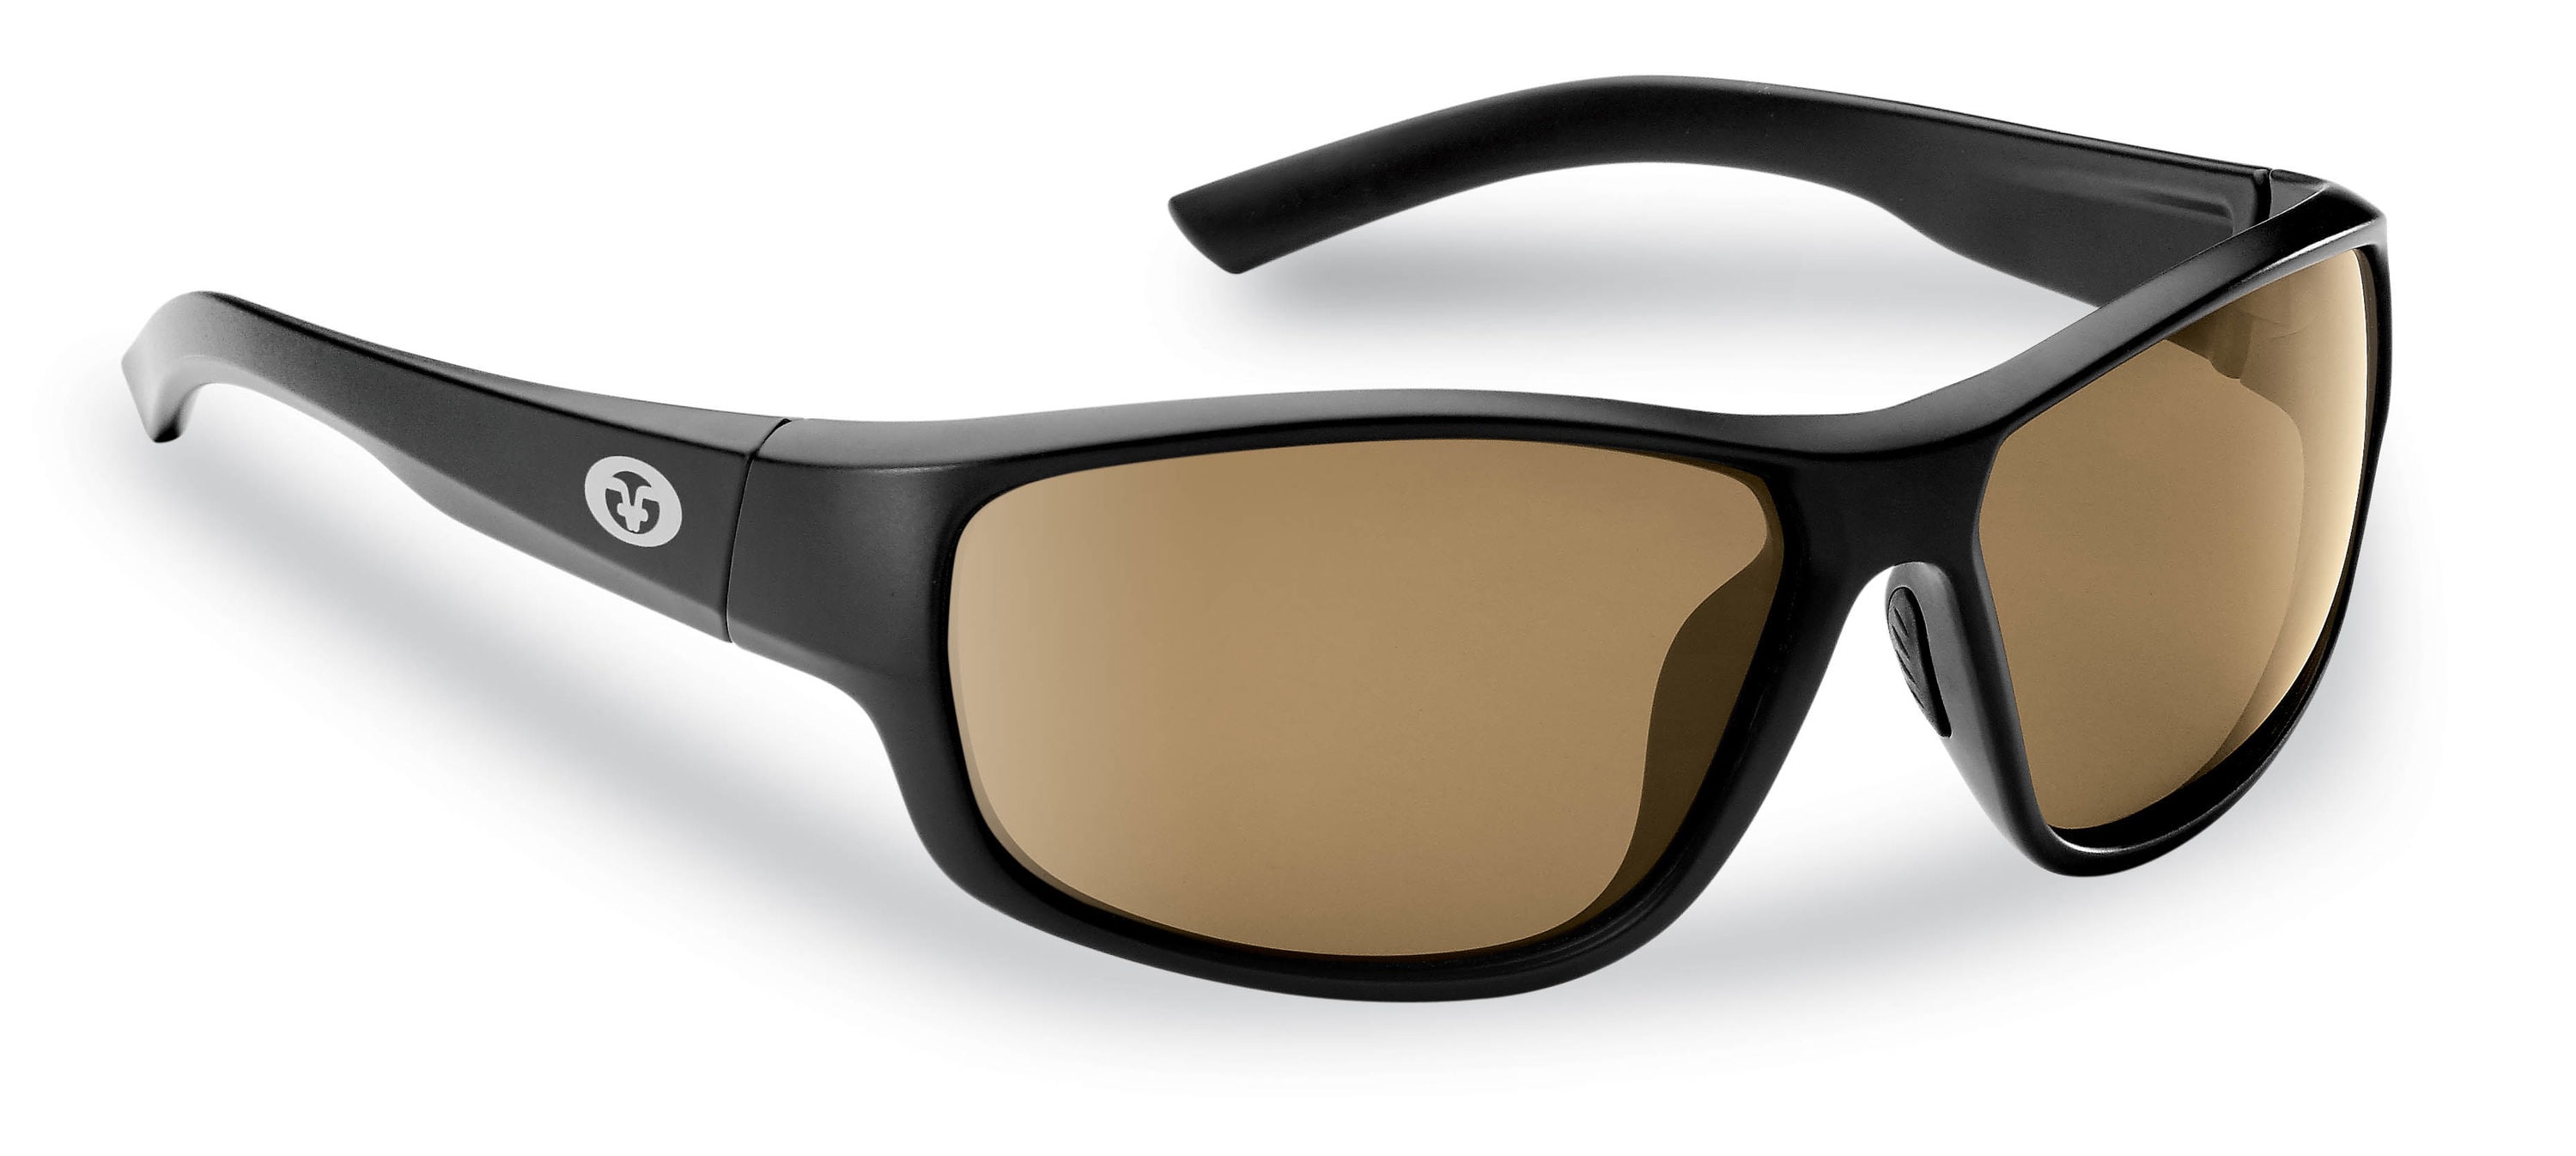 Details about   Flying Fisherman SAVANNAH 7803 Black Sunglasses w/ Polarized Lenses RF1057 